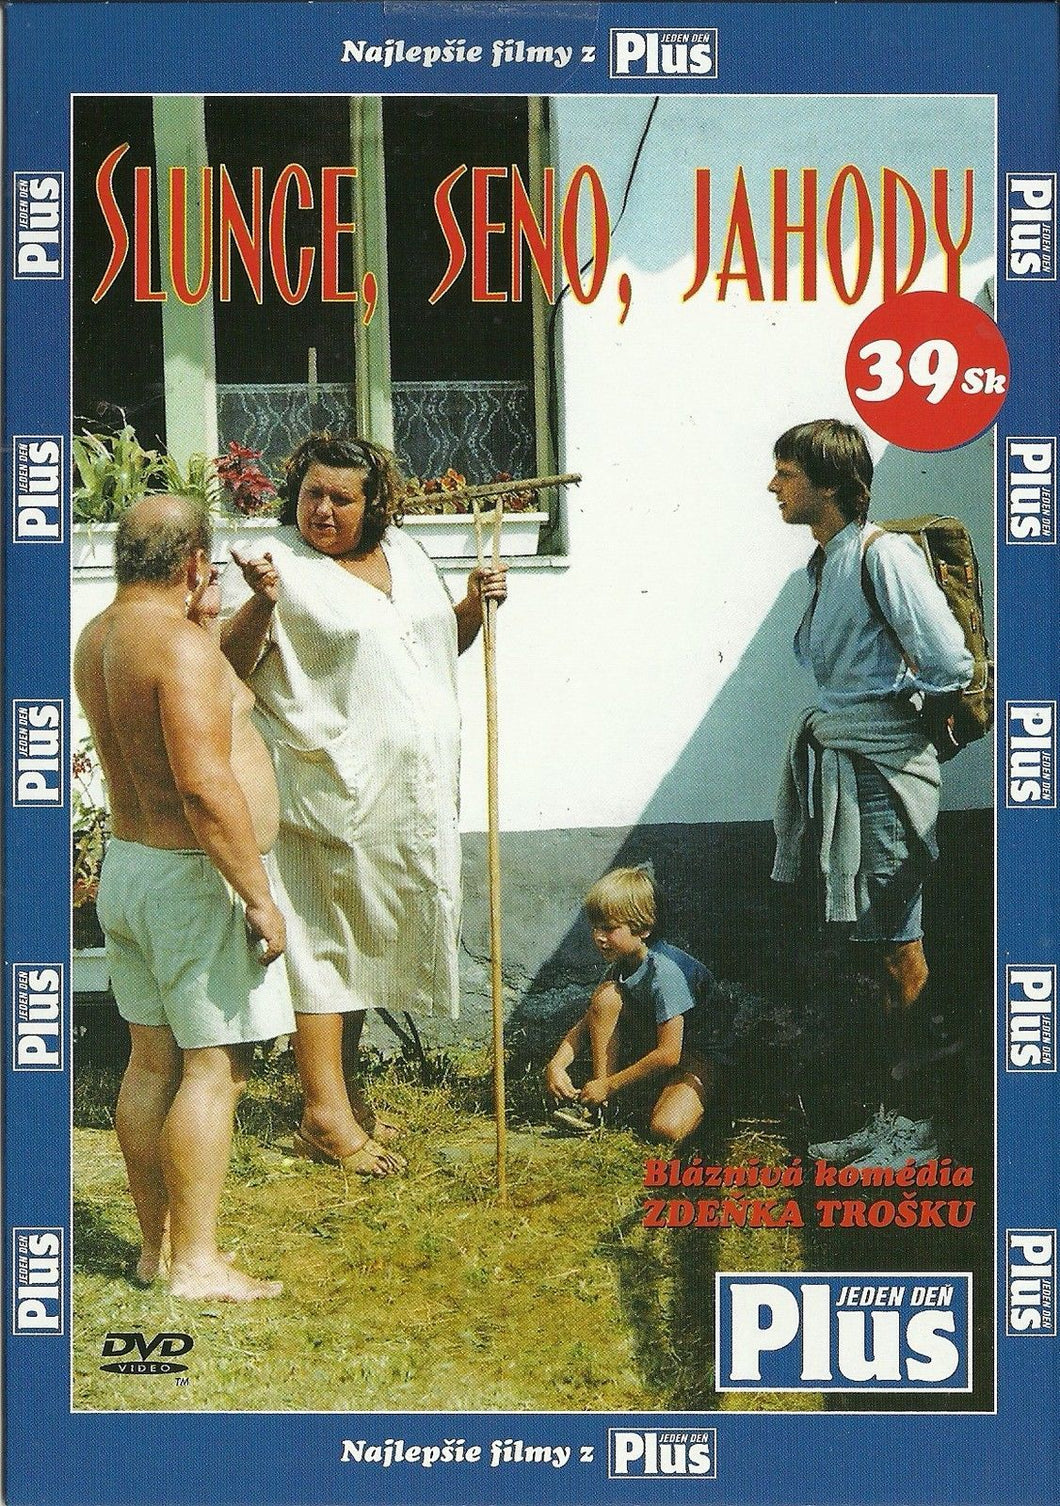 Sun, Hay, Strawberries (Slunce, Seno, Jahody) Czech DVD with subtitles - Czech Film Poster Gallery